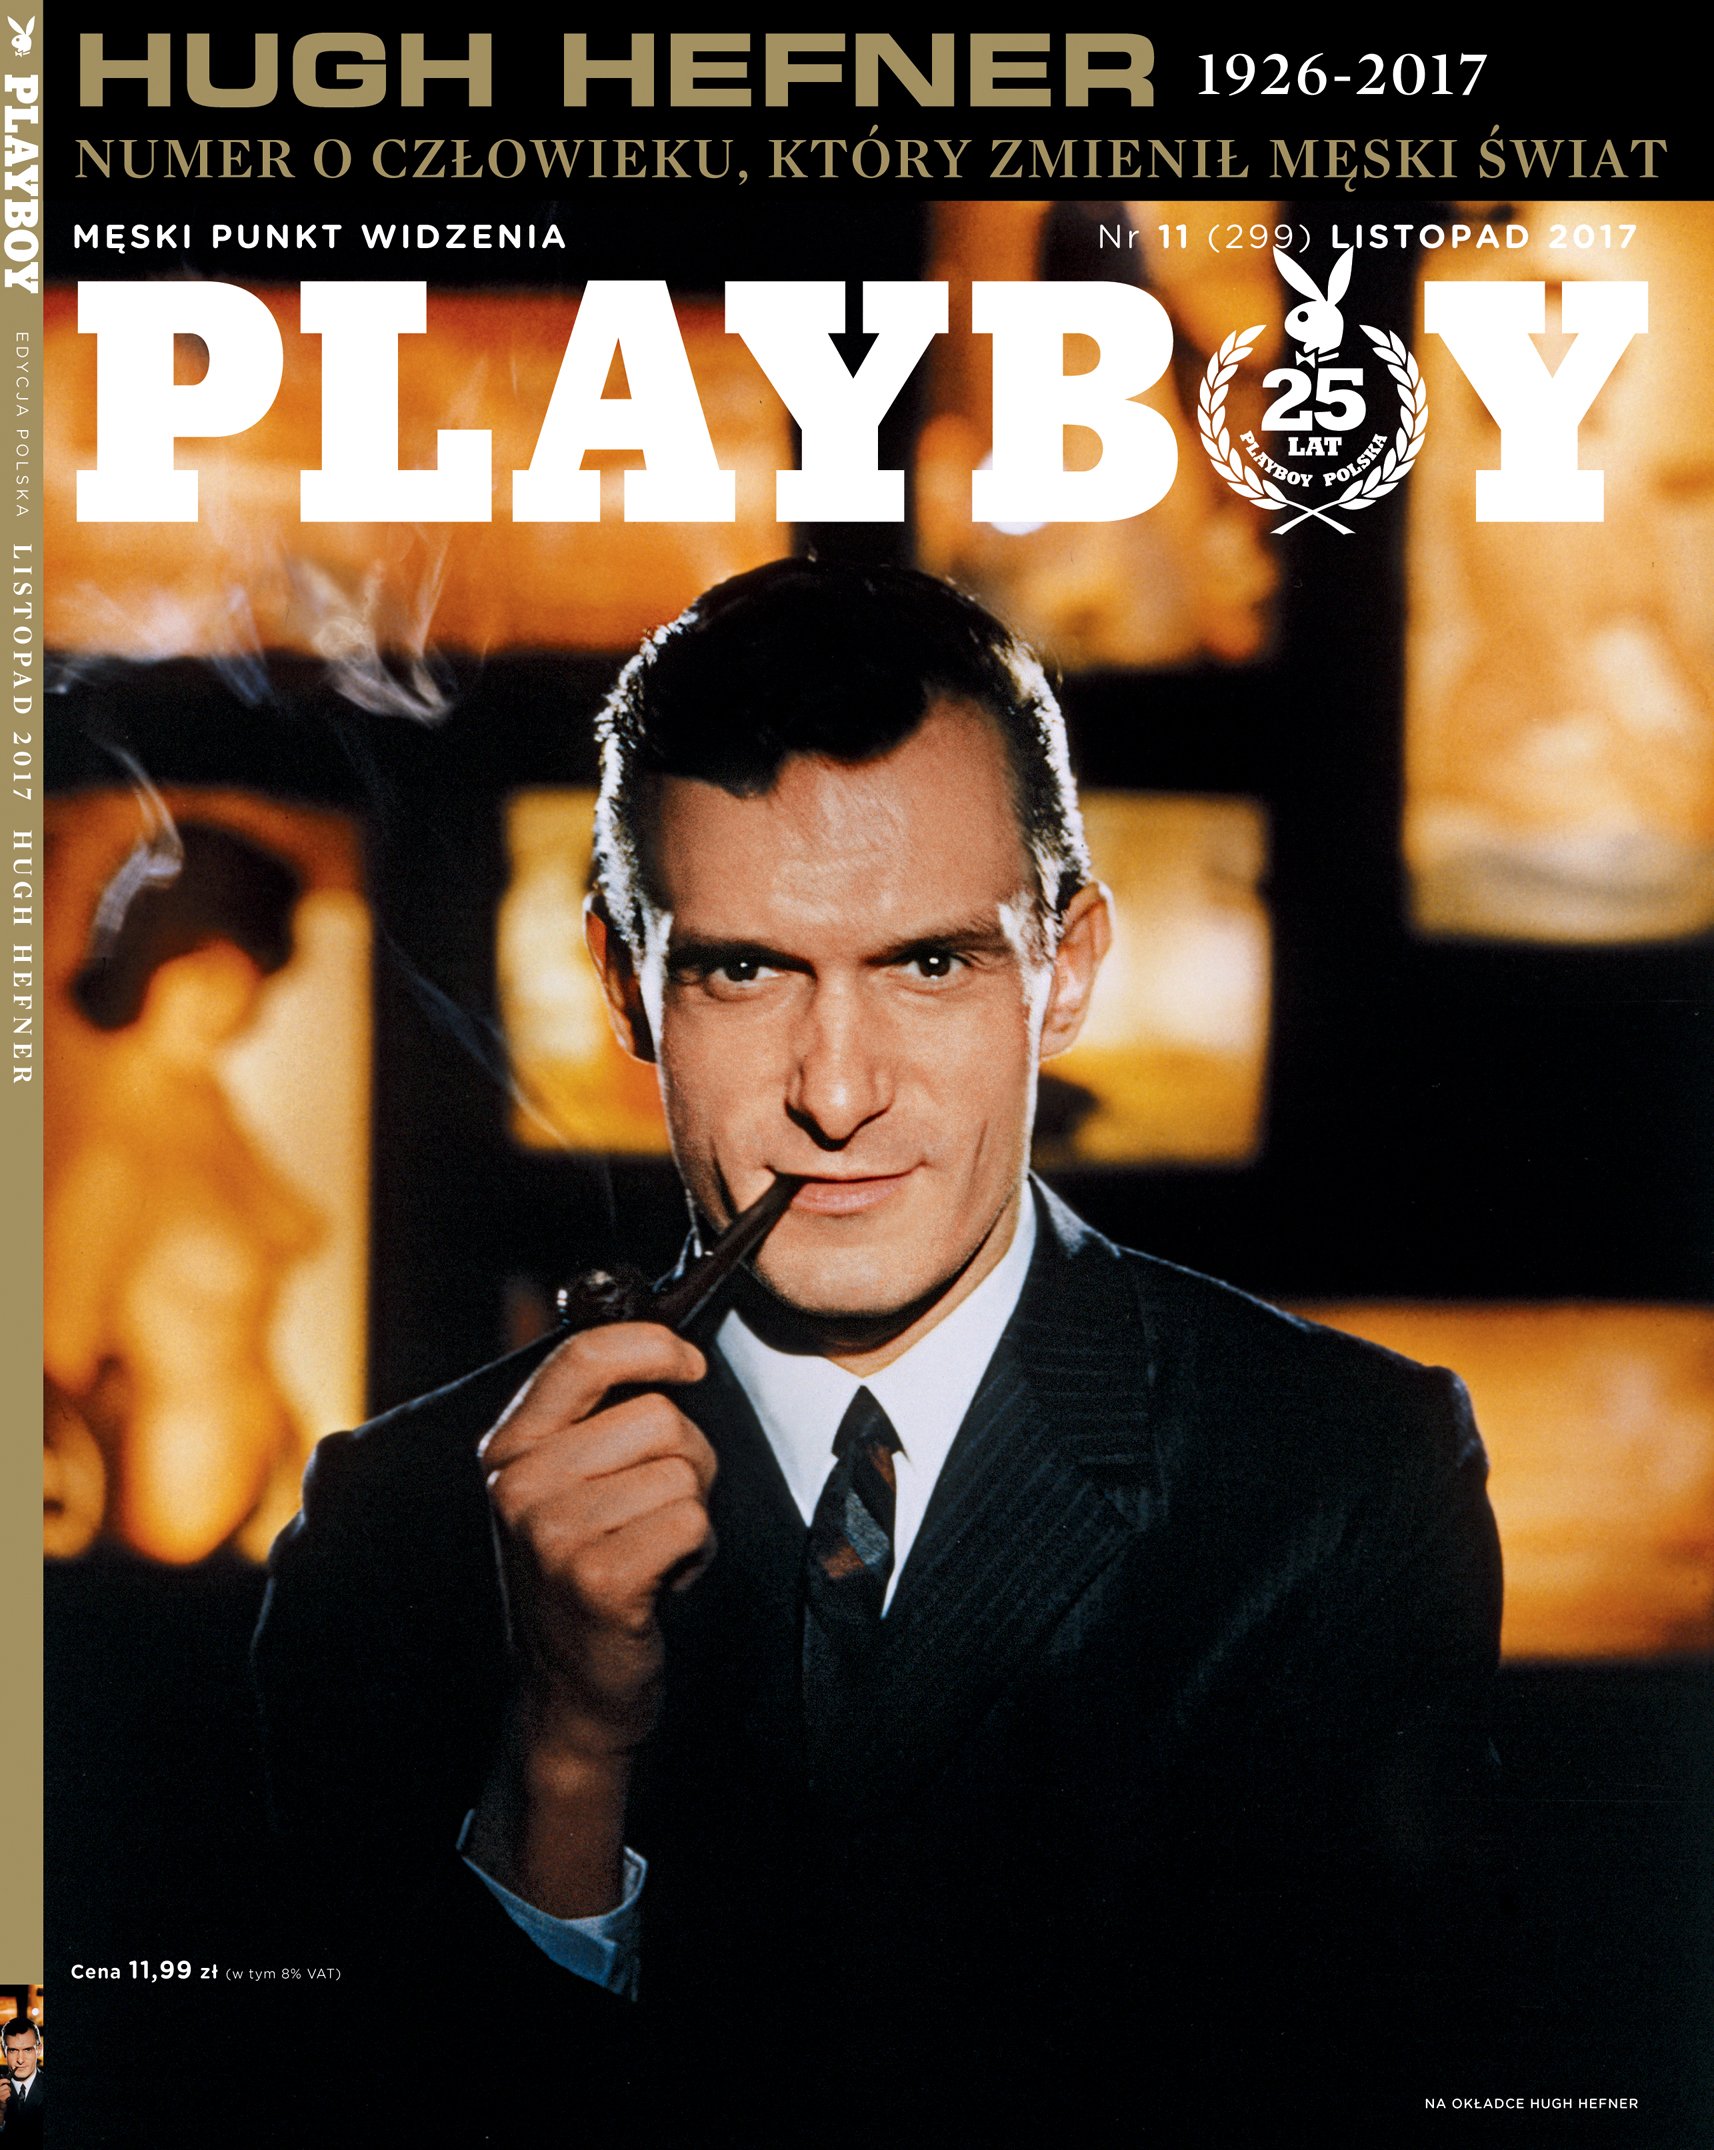 Playboy (Poland) November 2017 magazine back issue Playboy (Poland) magizine back copy Playboy (Poland) November 2017 Magazine Back Issue Published by HMH Publishing, Hugh Marston Hefner. Covergirl Hugh Hefner.